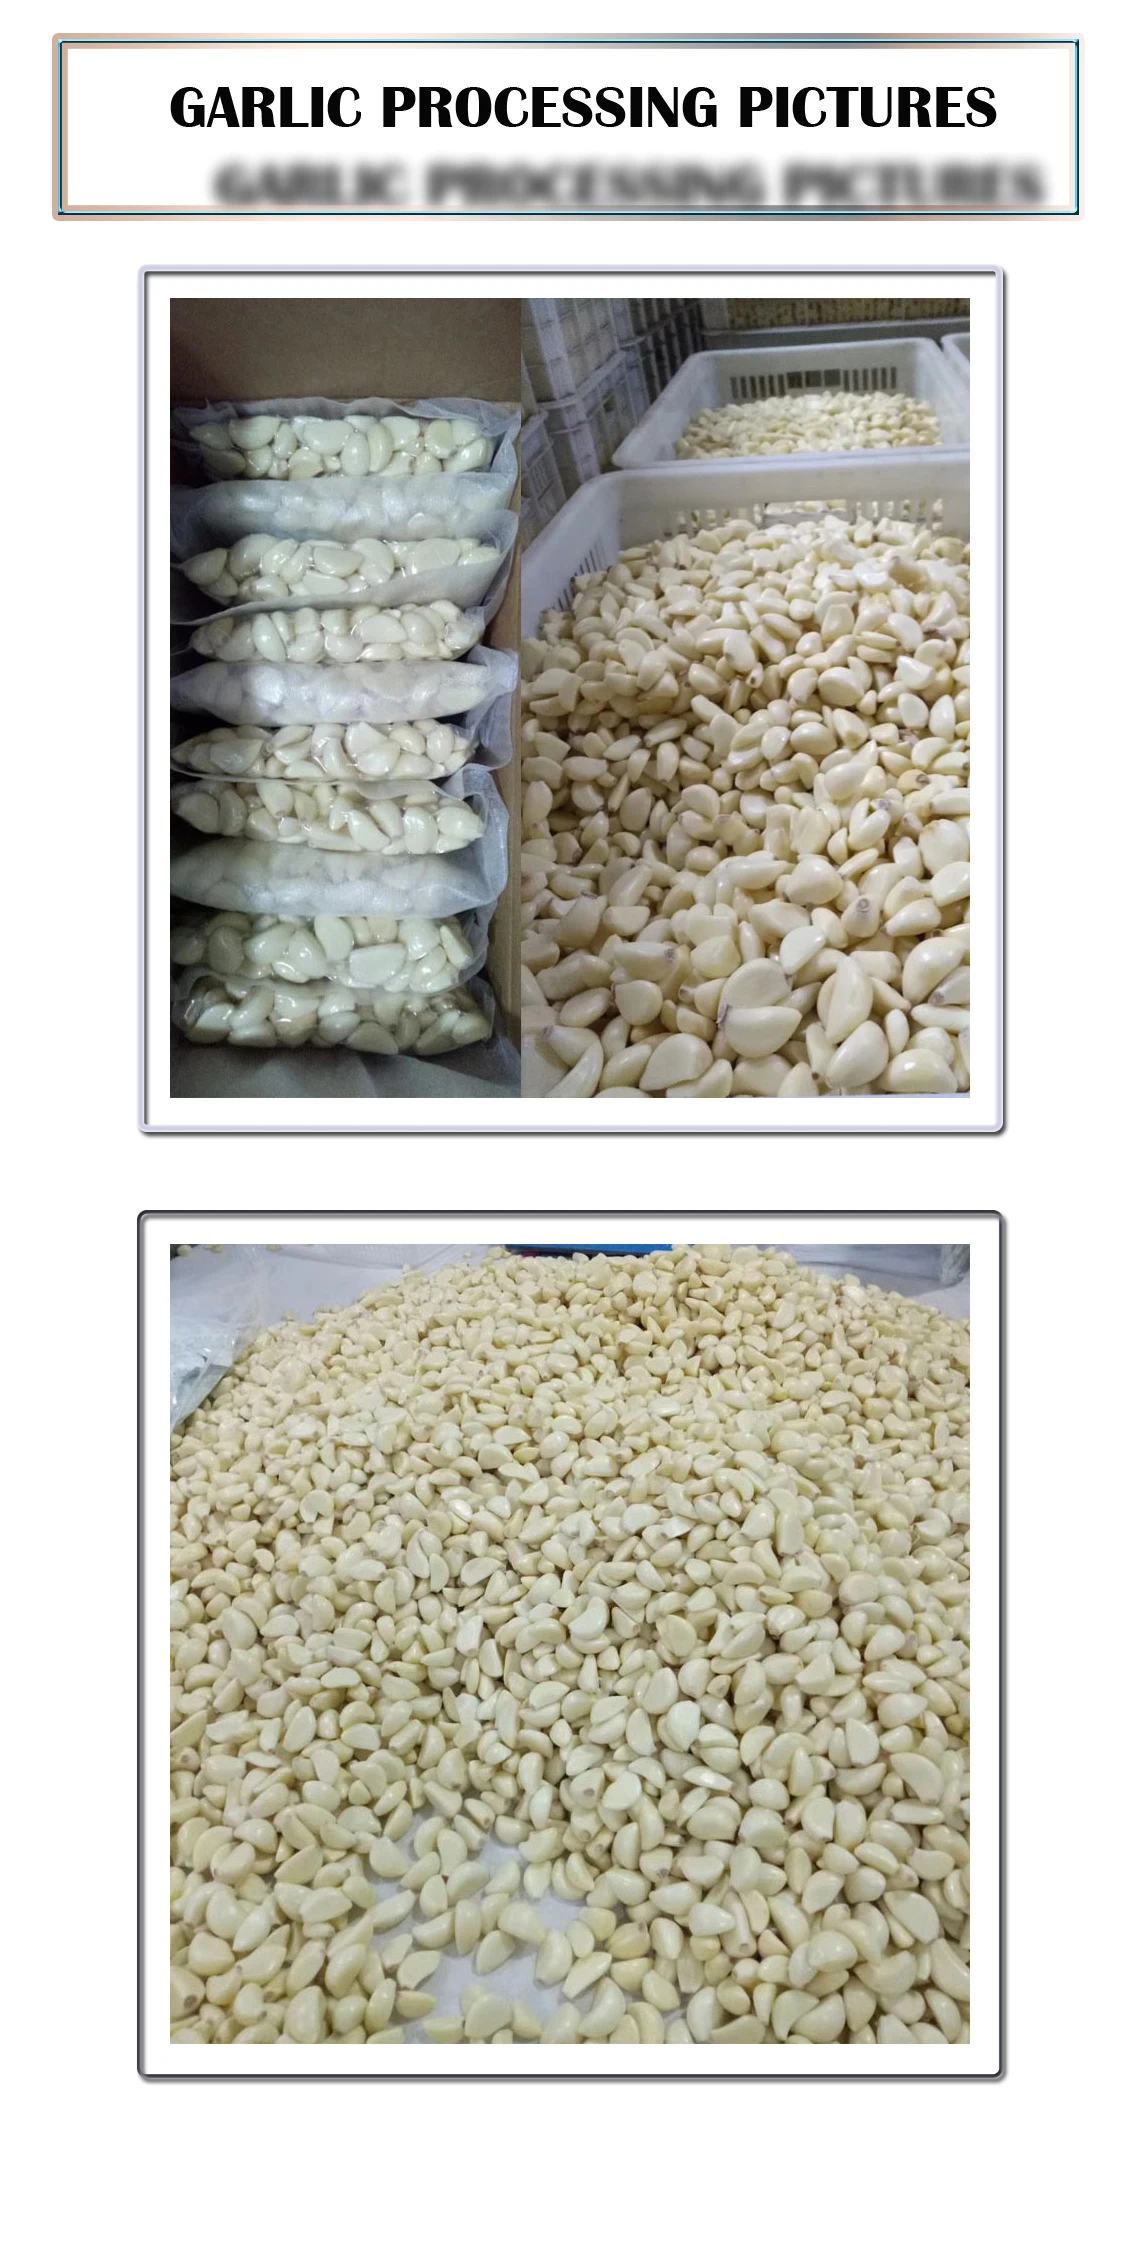 Topchances 20kg/h Commercial Garlic Peeling Machine Automatic